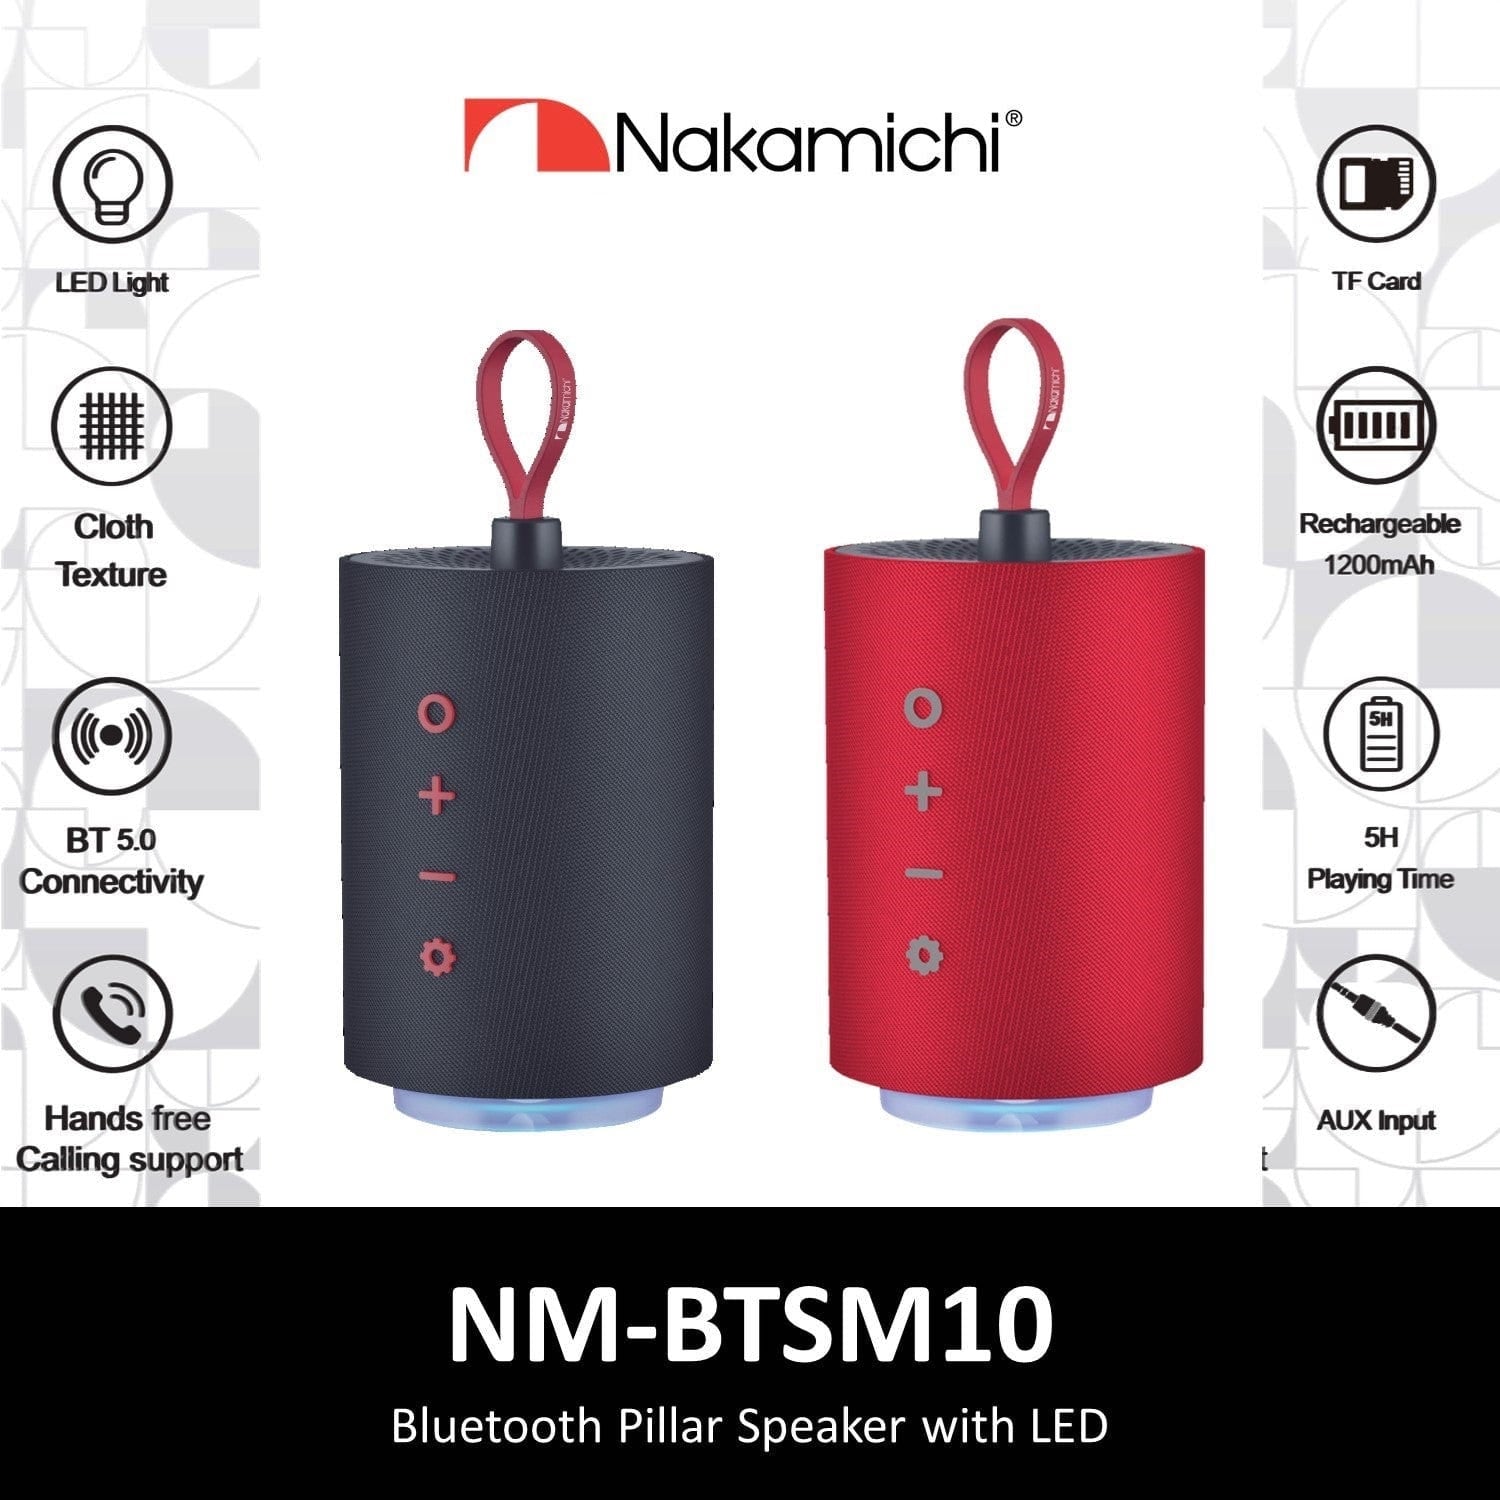 Nakamichi NM-BTSM10 Portable Bluetooth Speaker with LED Light